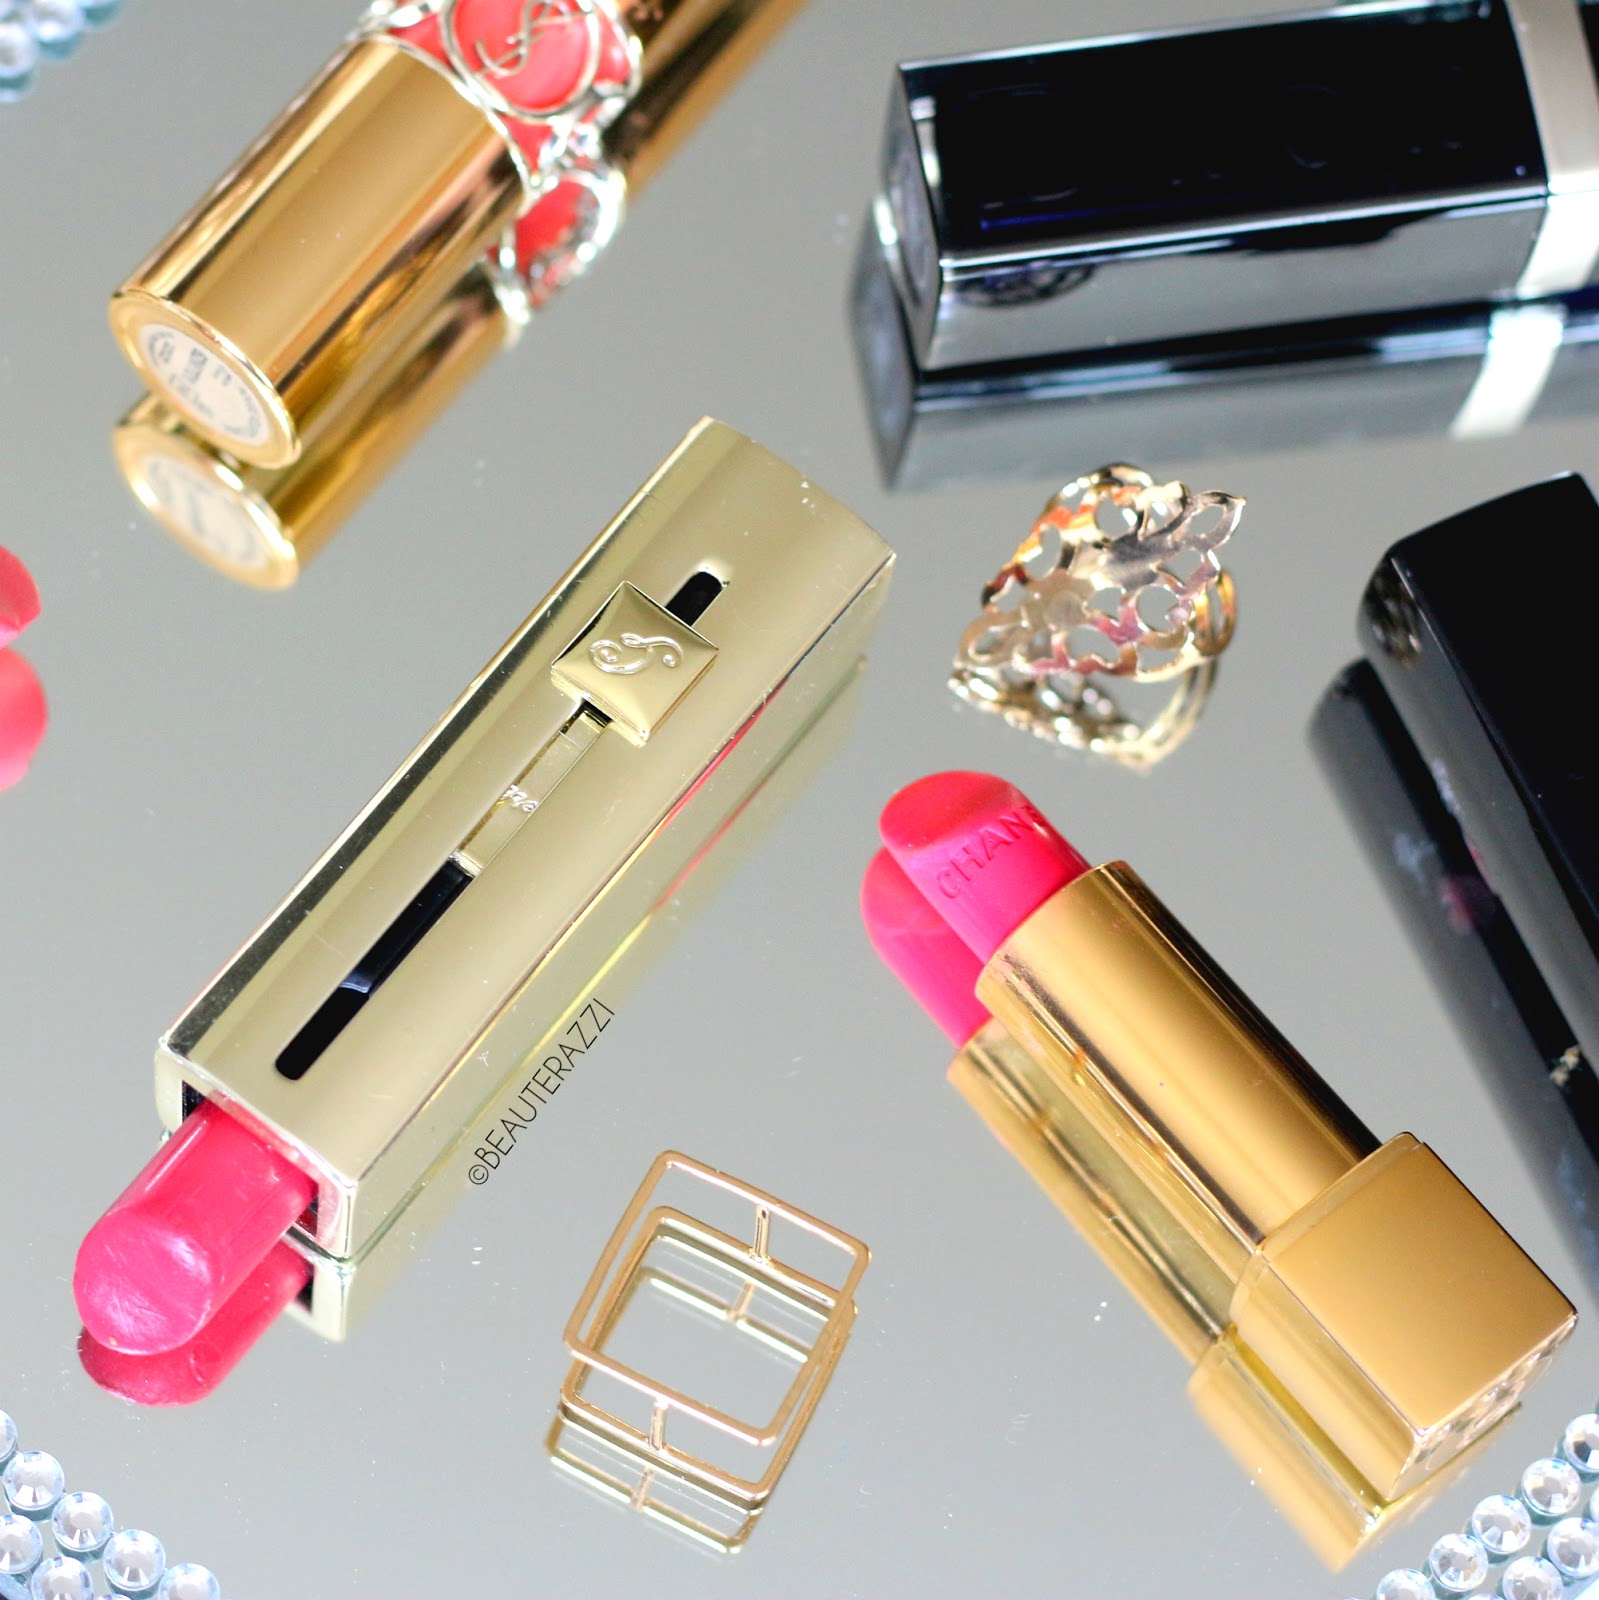 5 Luxury Lipsticks That Everyone Needs